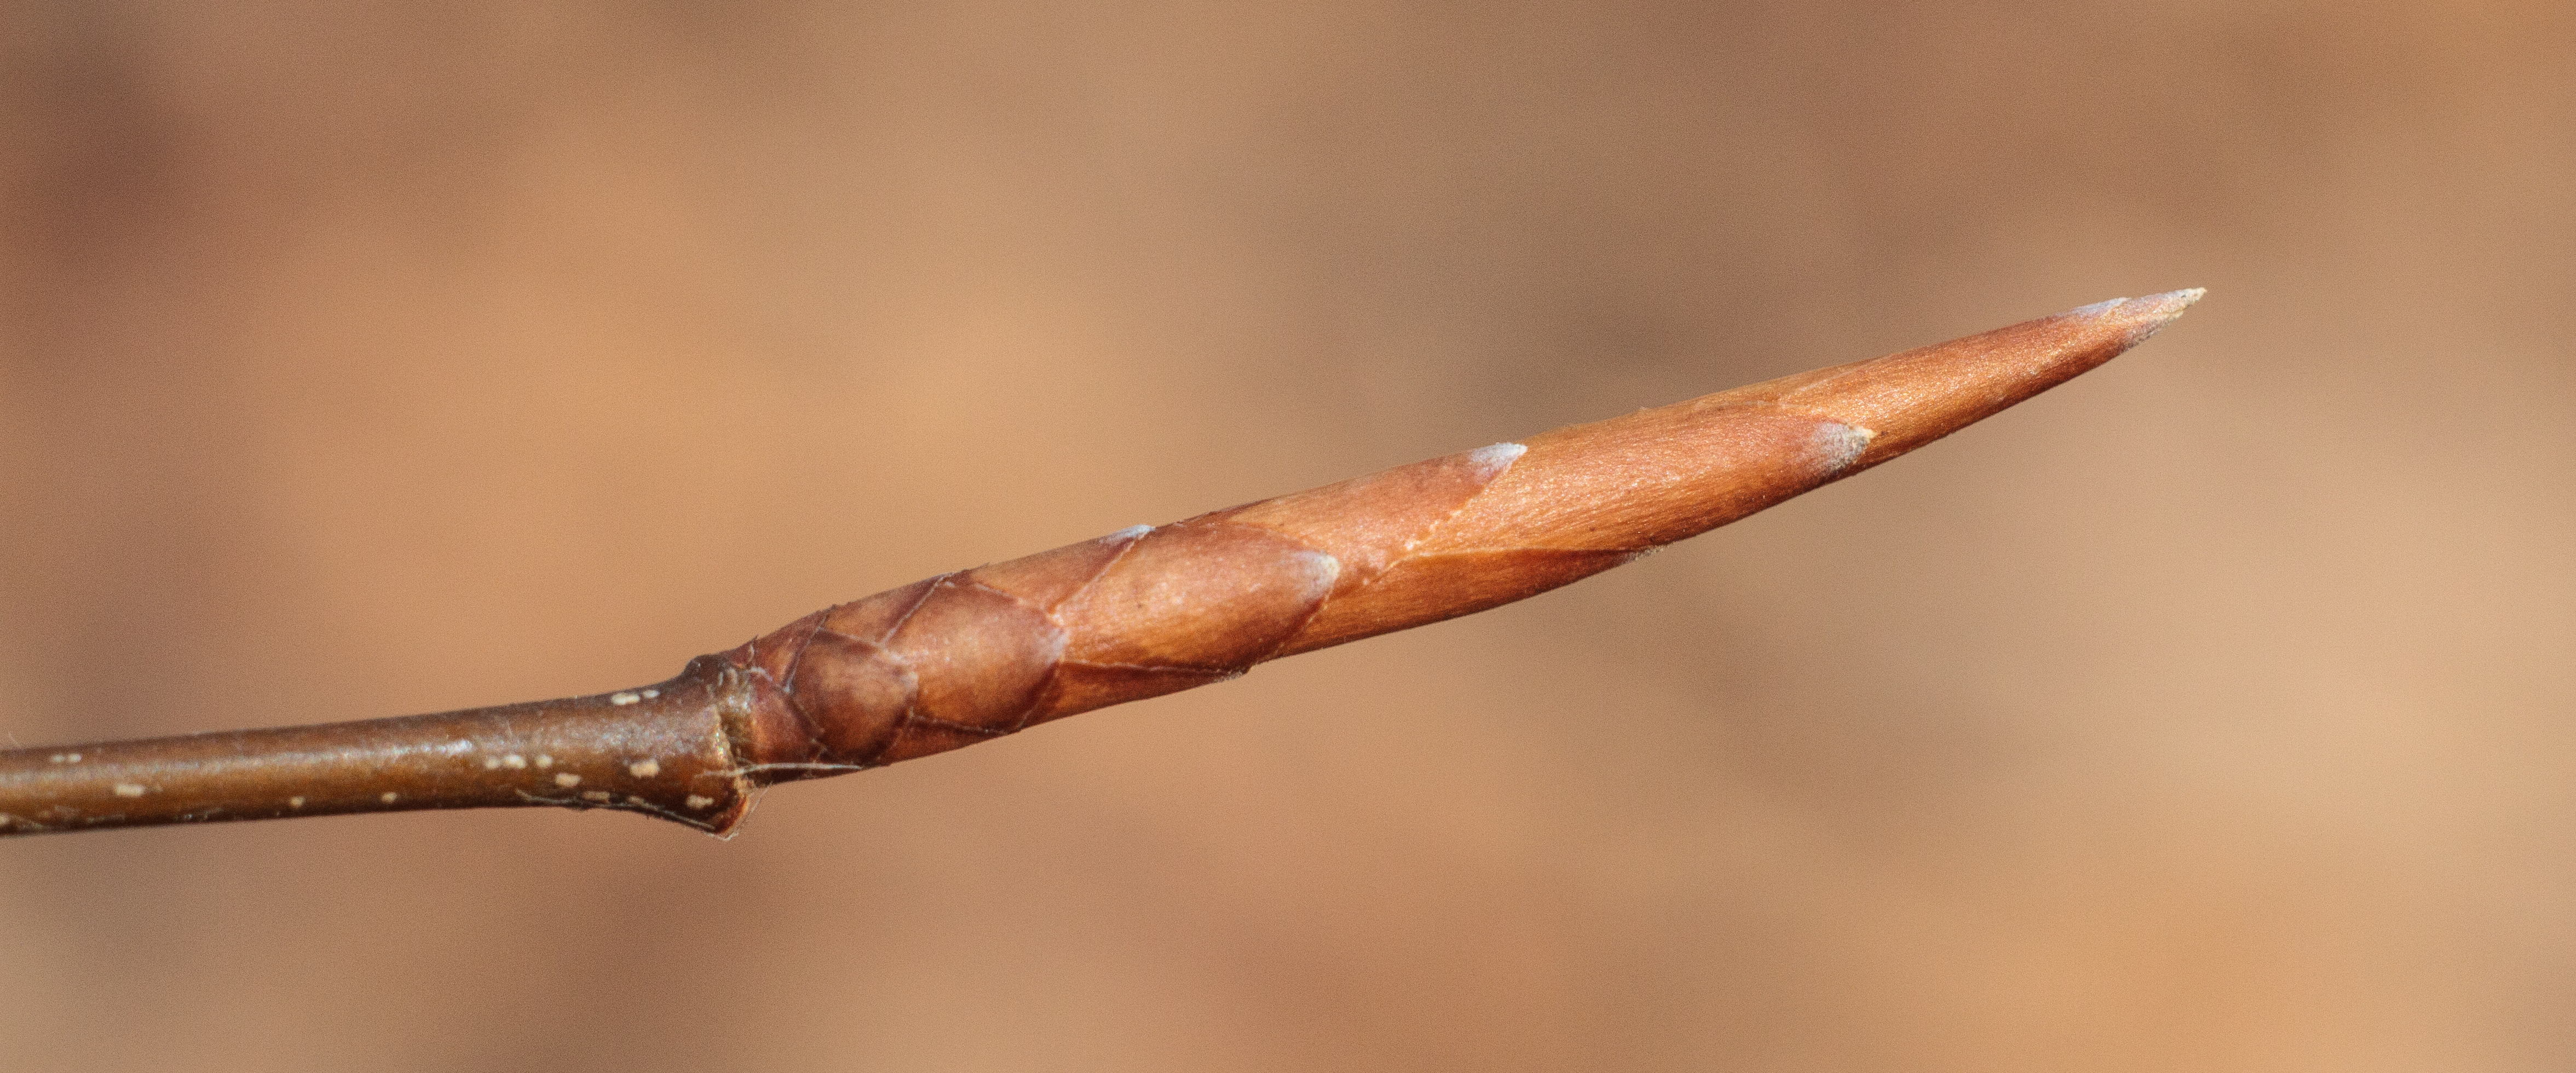 close up photo of an american beech bud